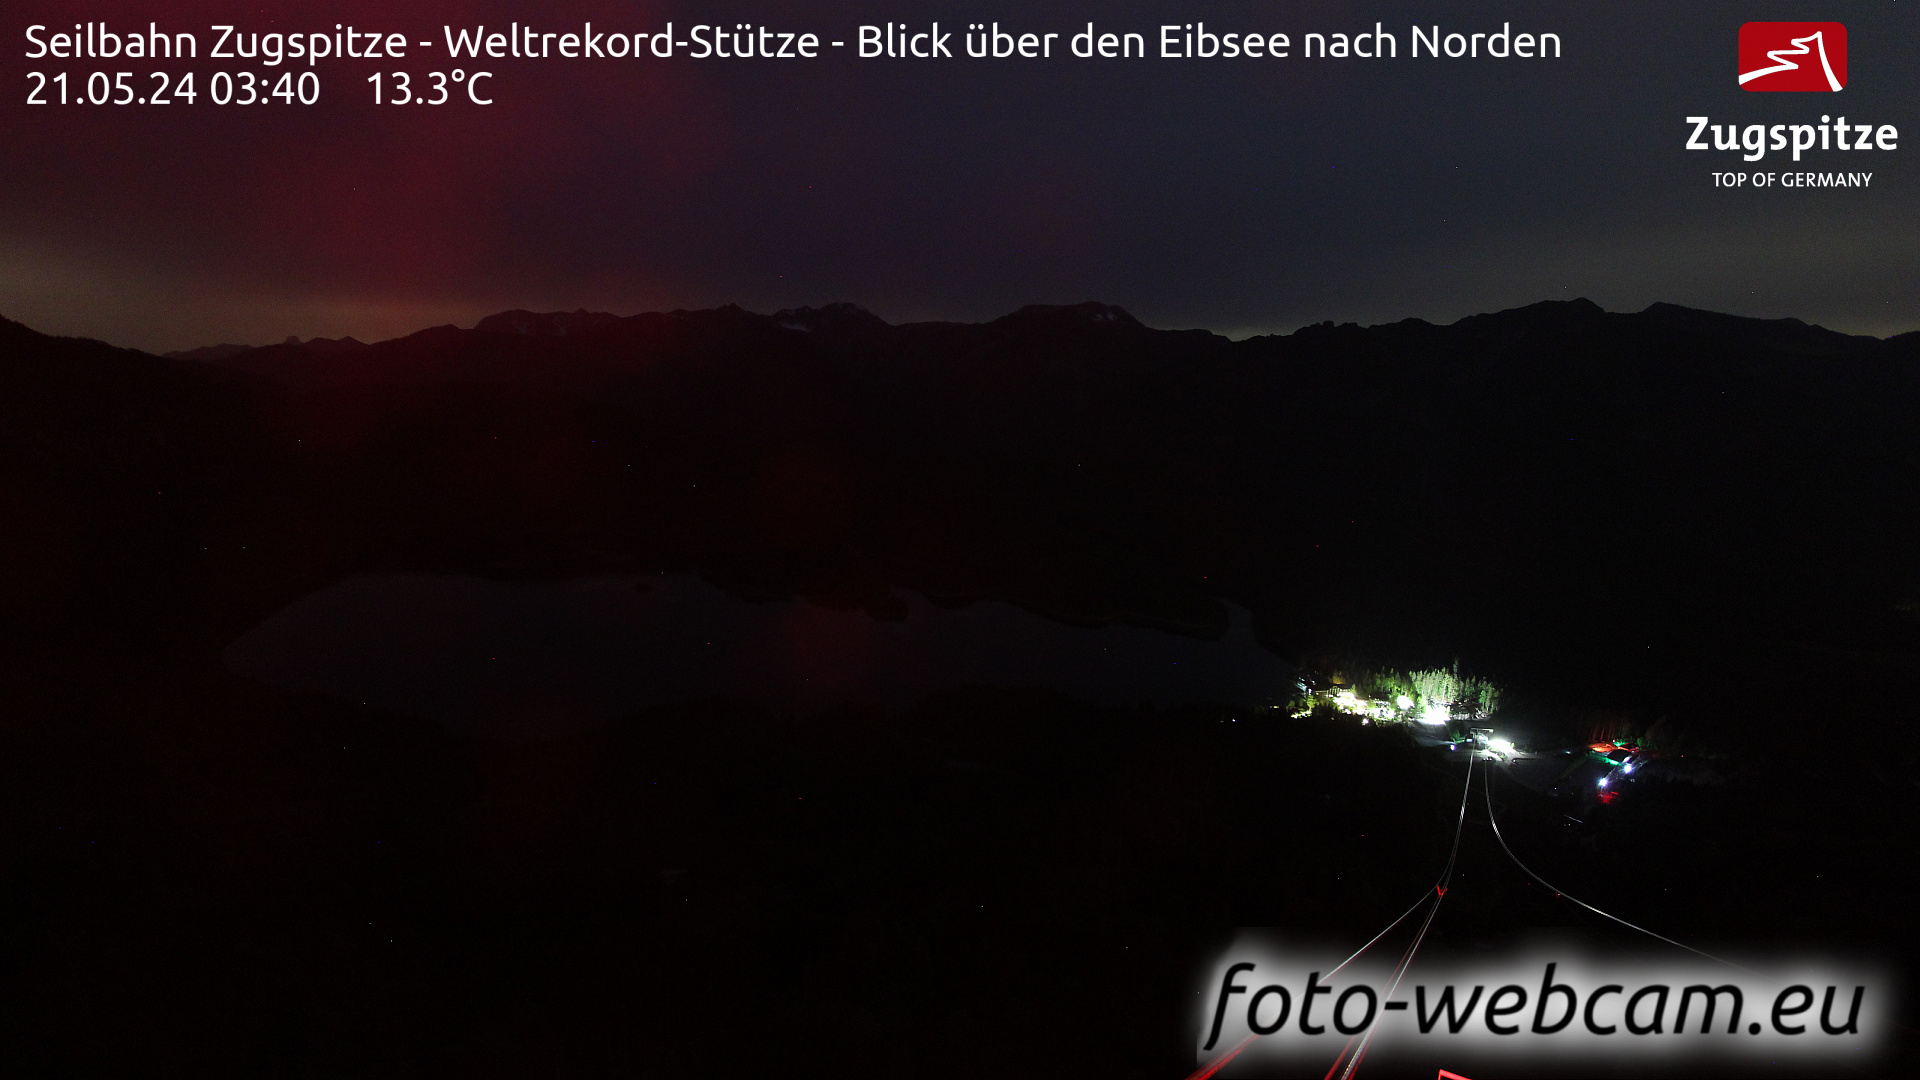 Zugspitze Mo. 03:49